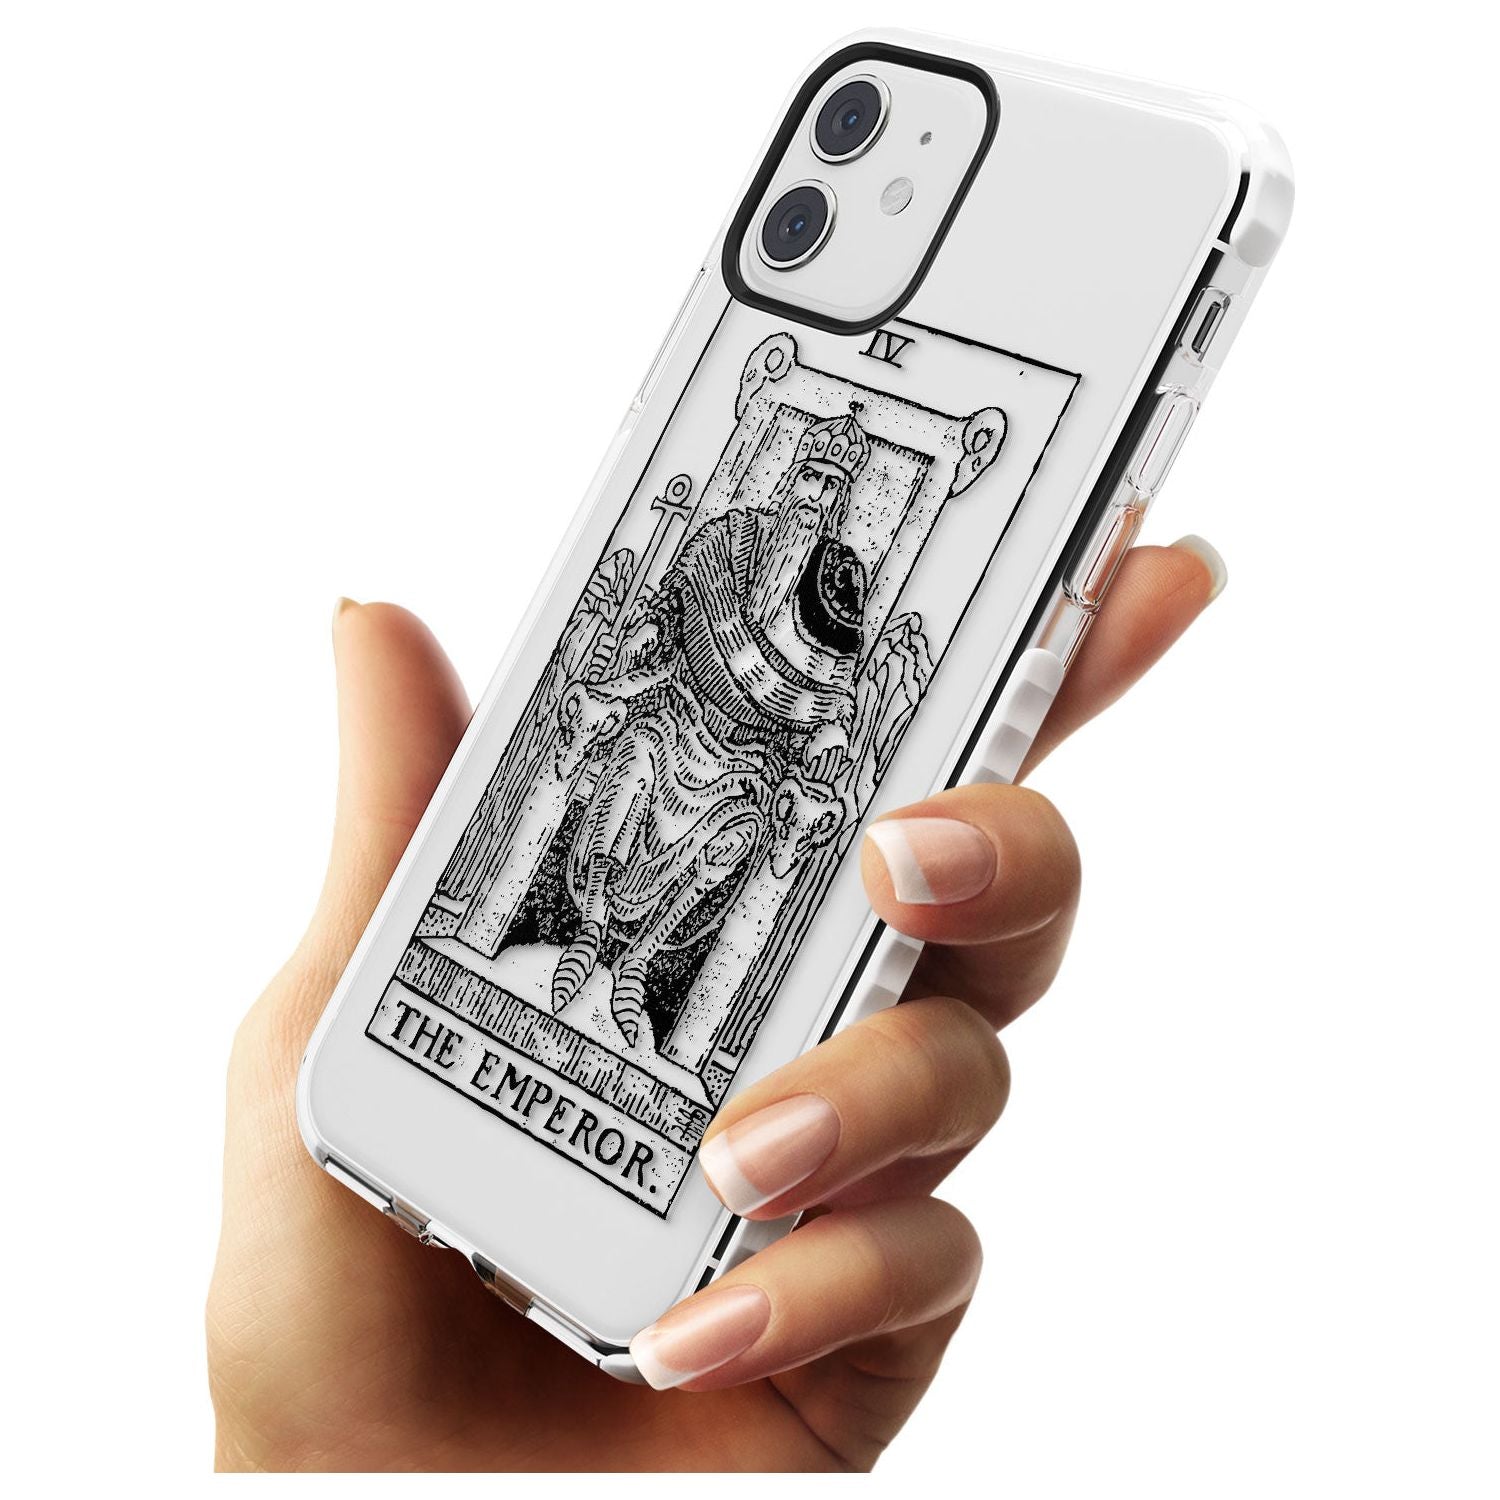 The Emperor Tarot Card - Transparent Slim TPU Phone Case for iPhone 11